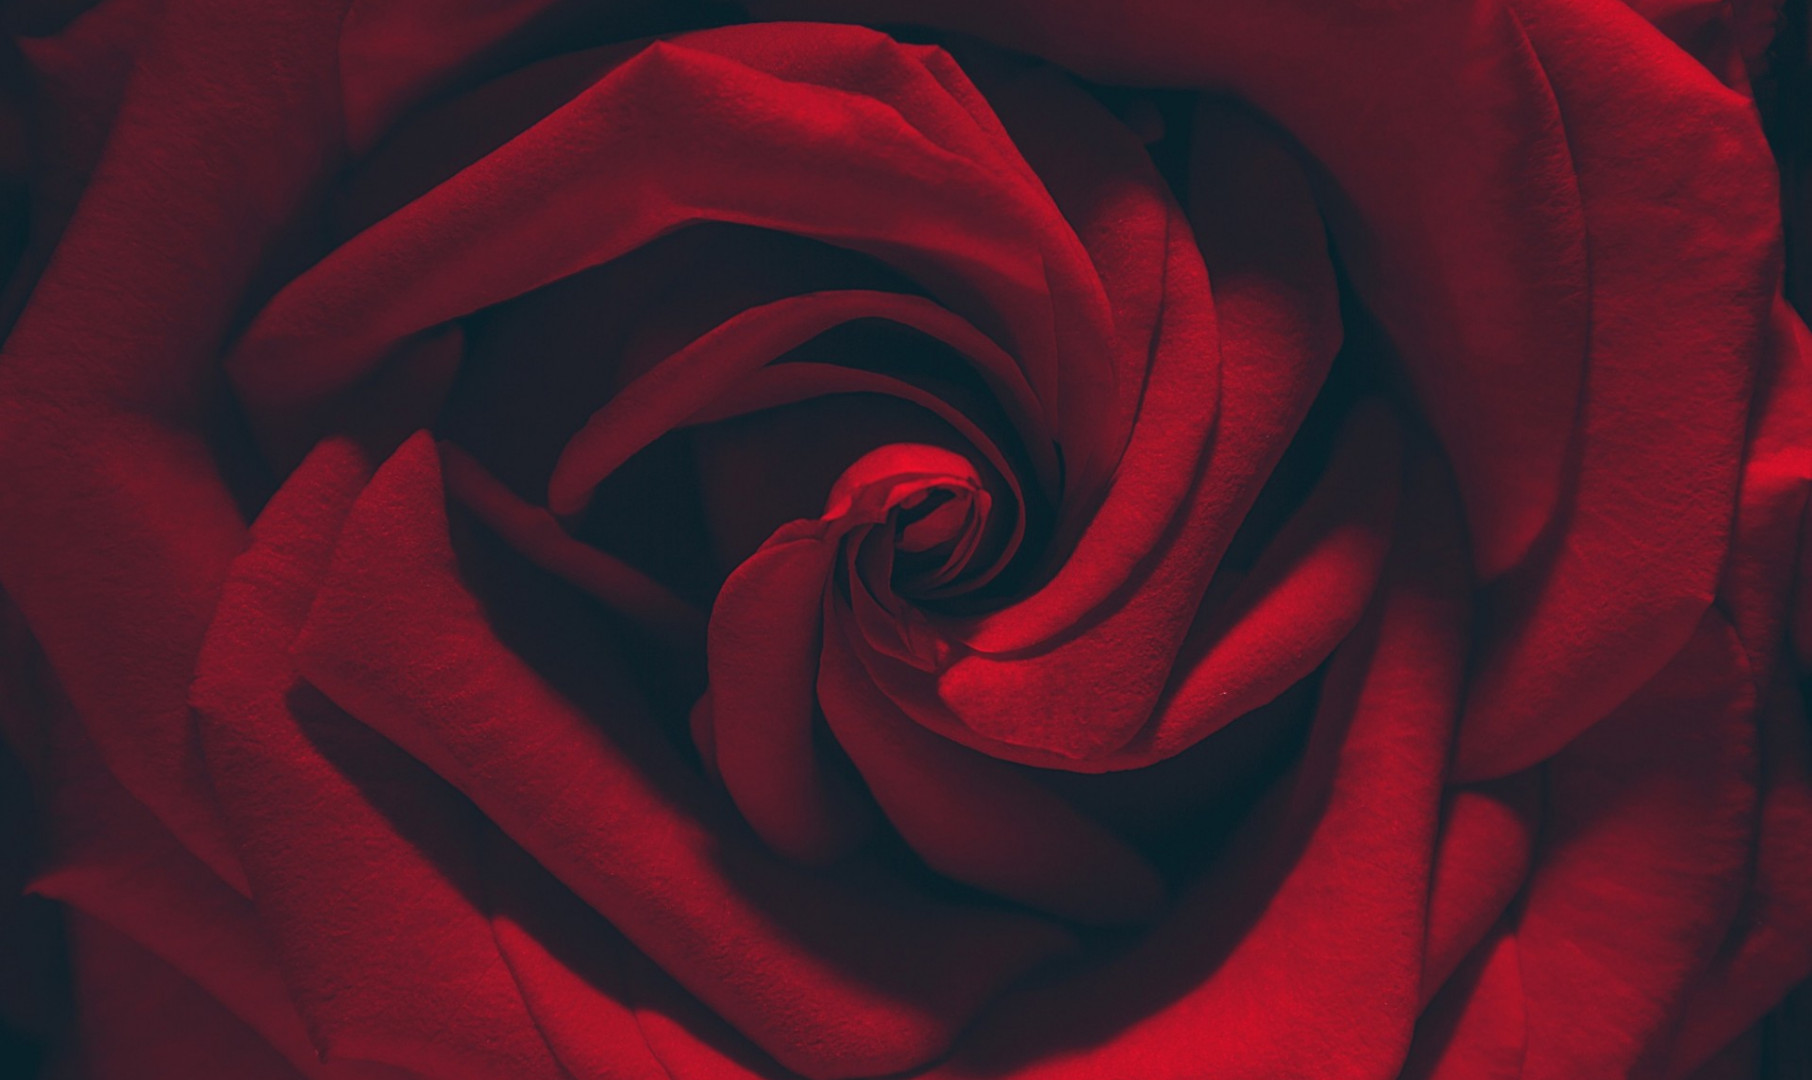 Bordowa róża